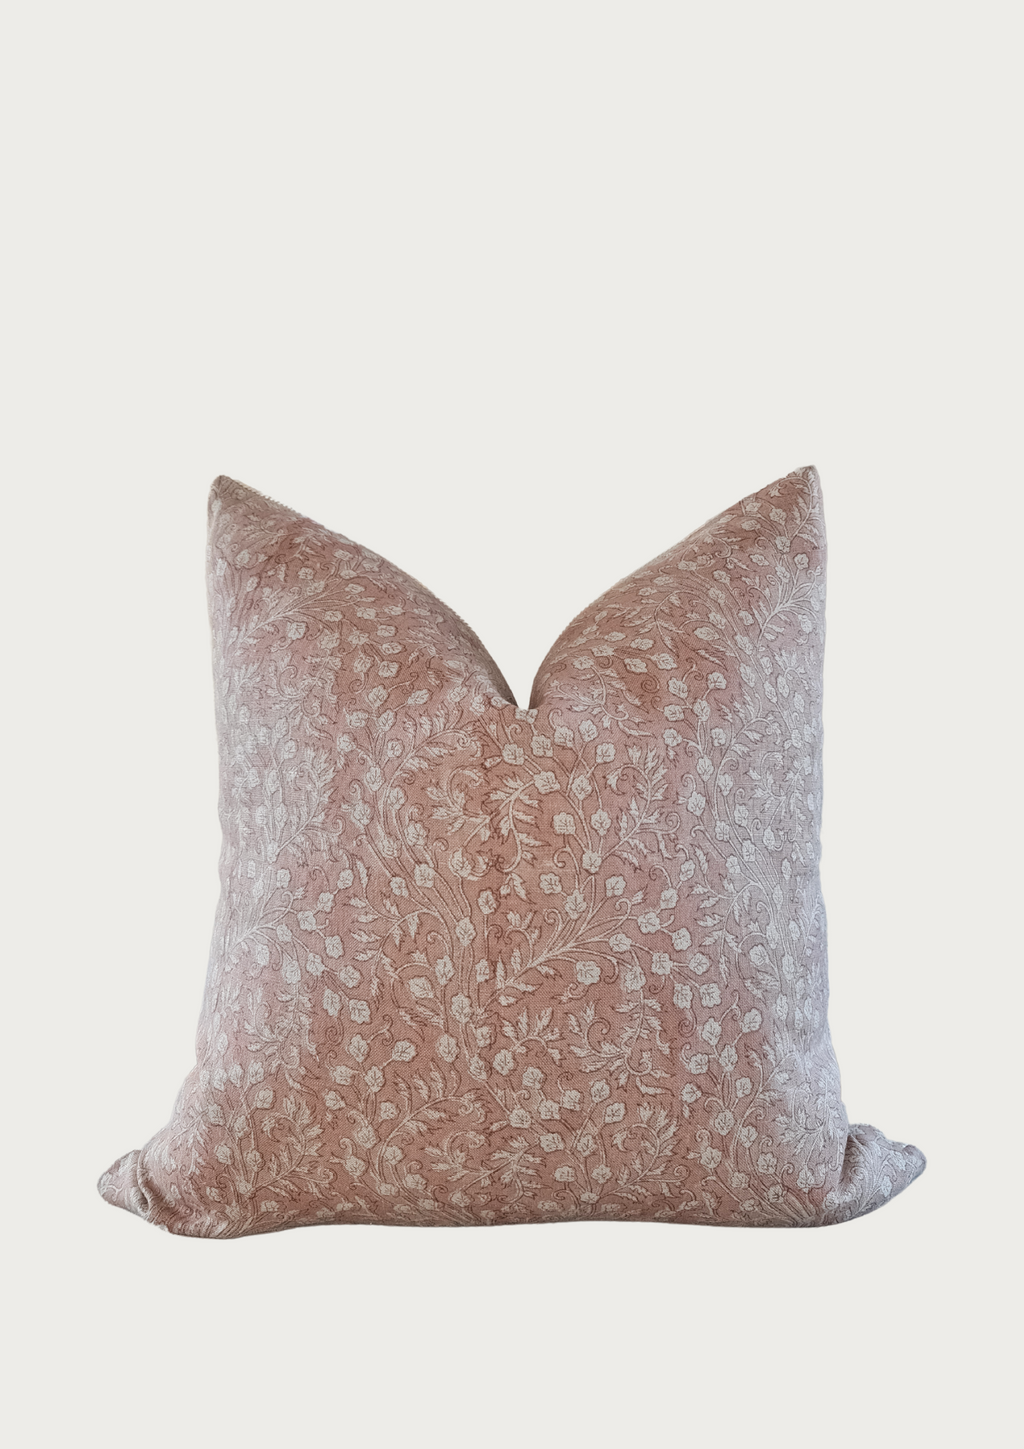 Blomus - Cushion cover 50x50 cm - Copri cuscino - Tan